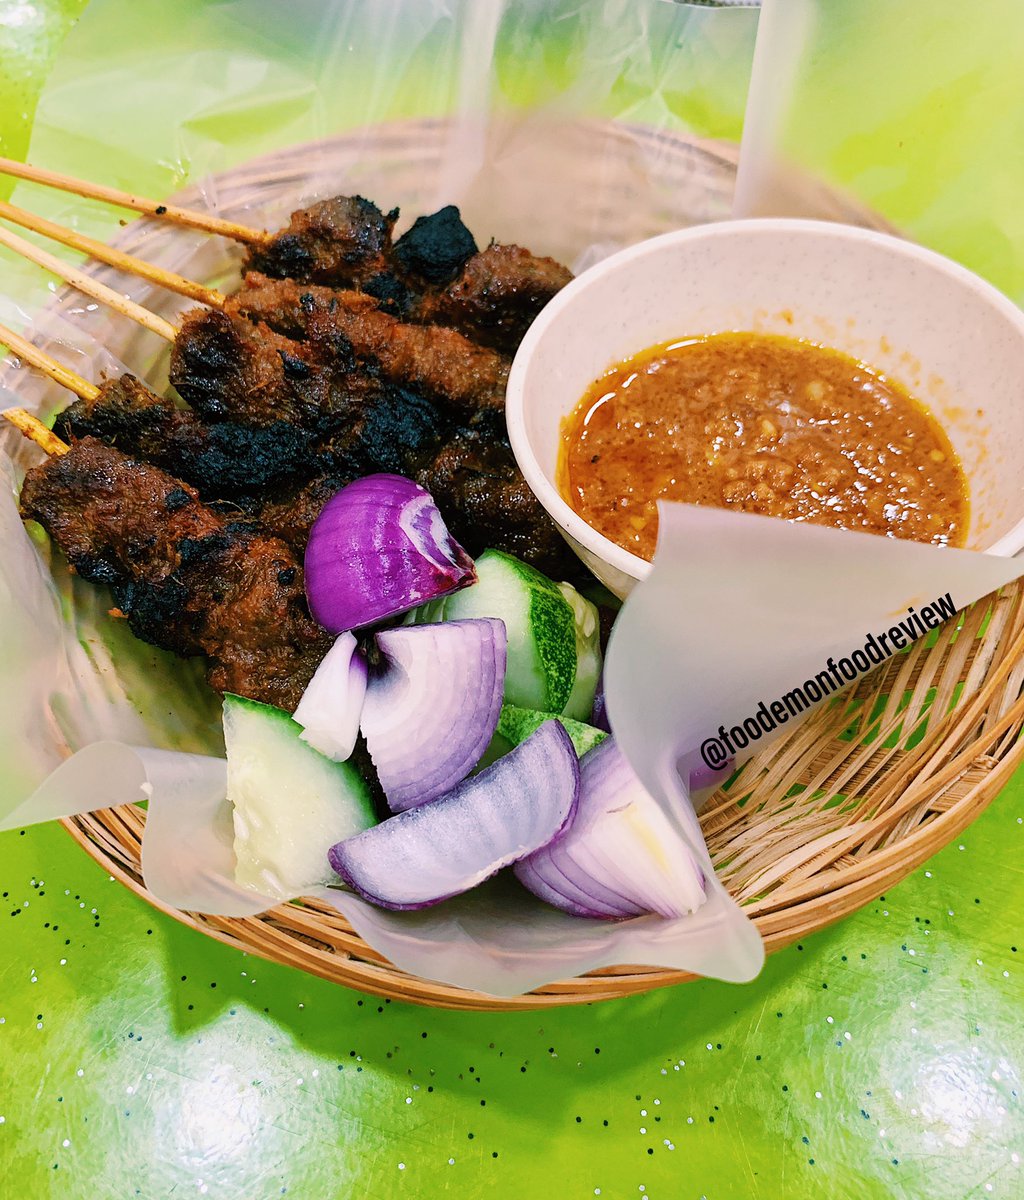 Beef Satay at Go Satay.
•
Price: RM7.50.
Rate: 4/5.
•
#foodporn #malaysianfood #malayfood #sate #satay